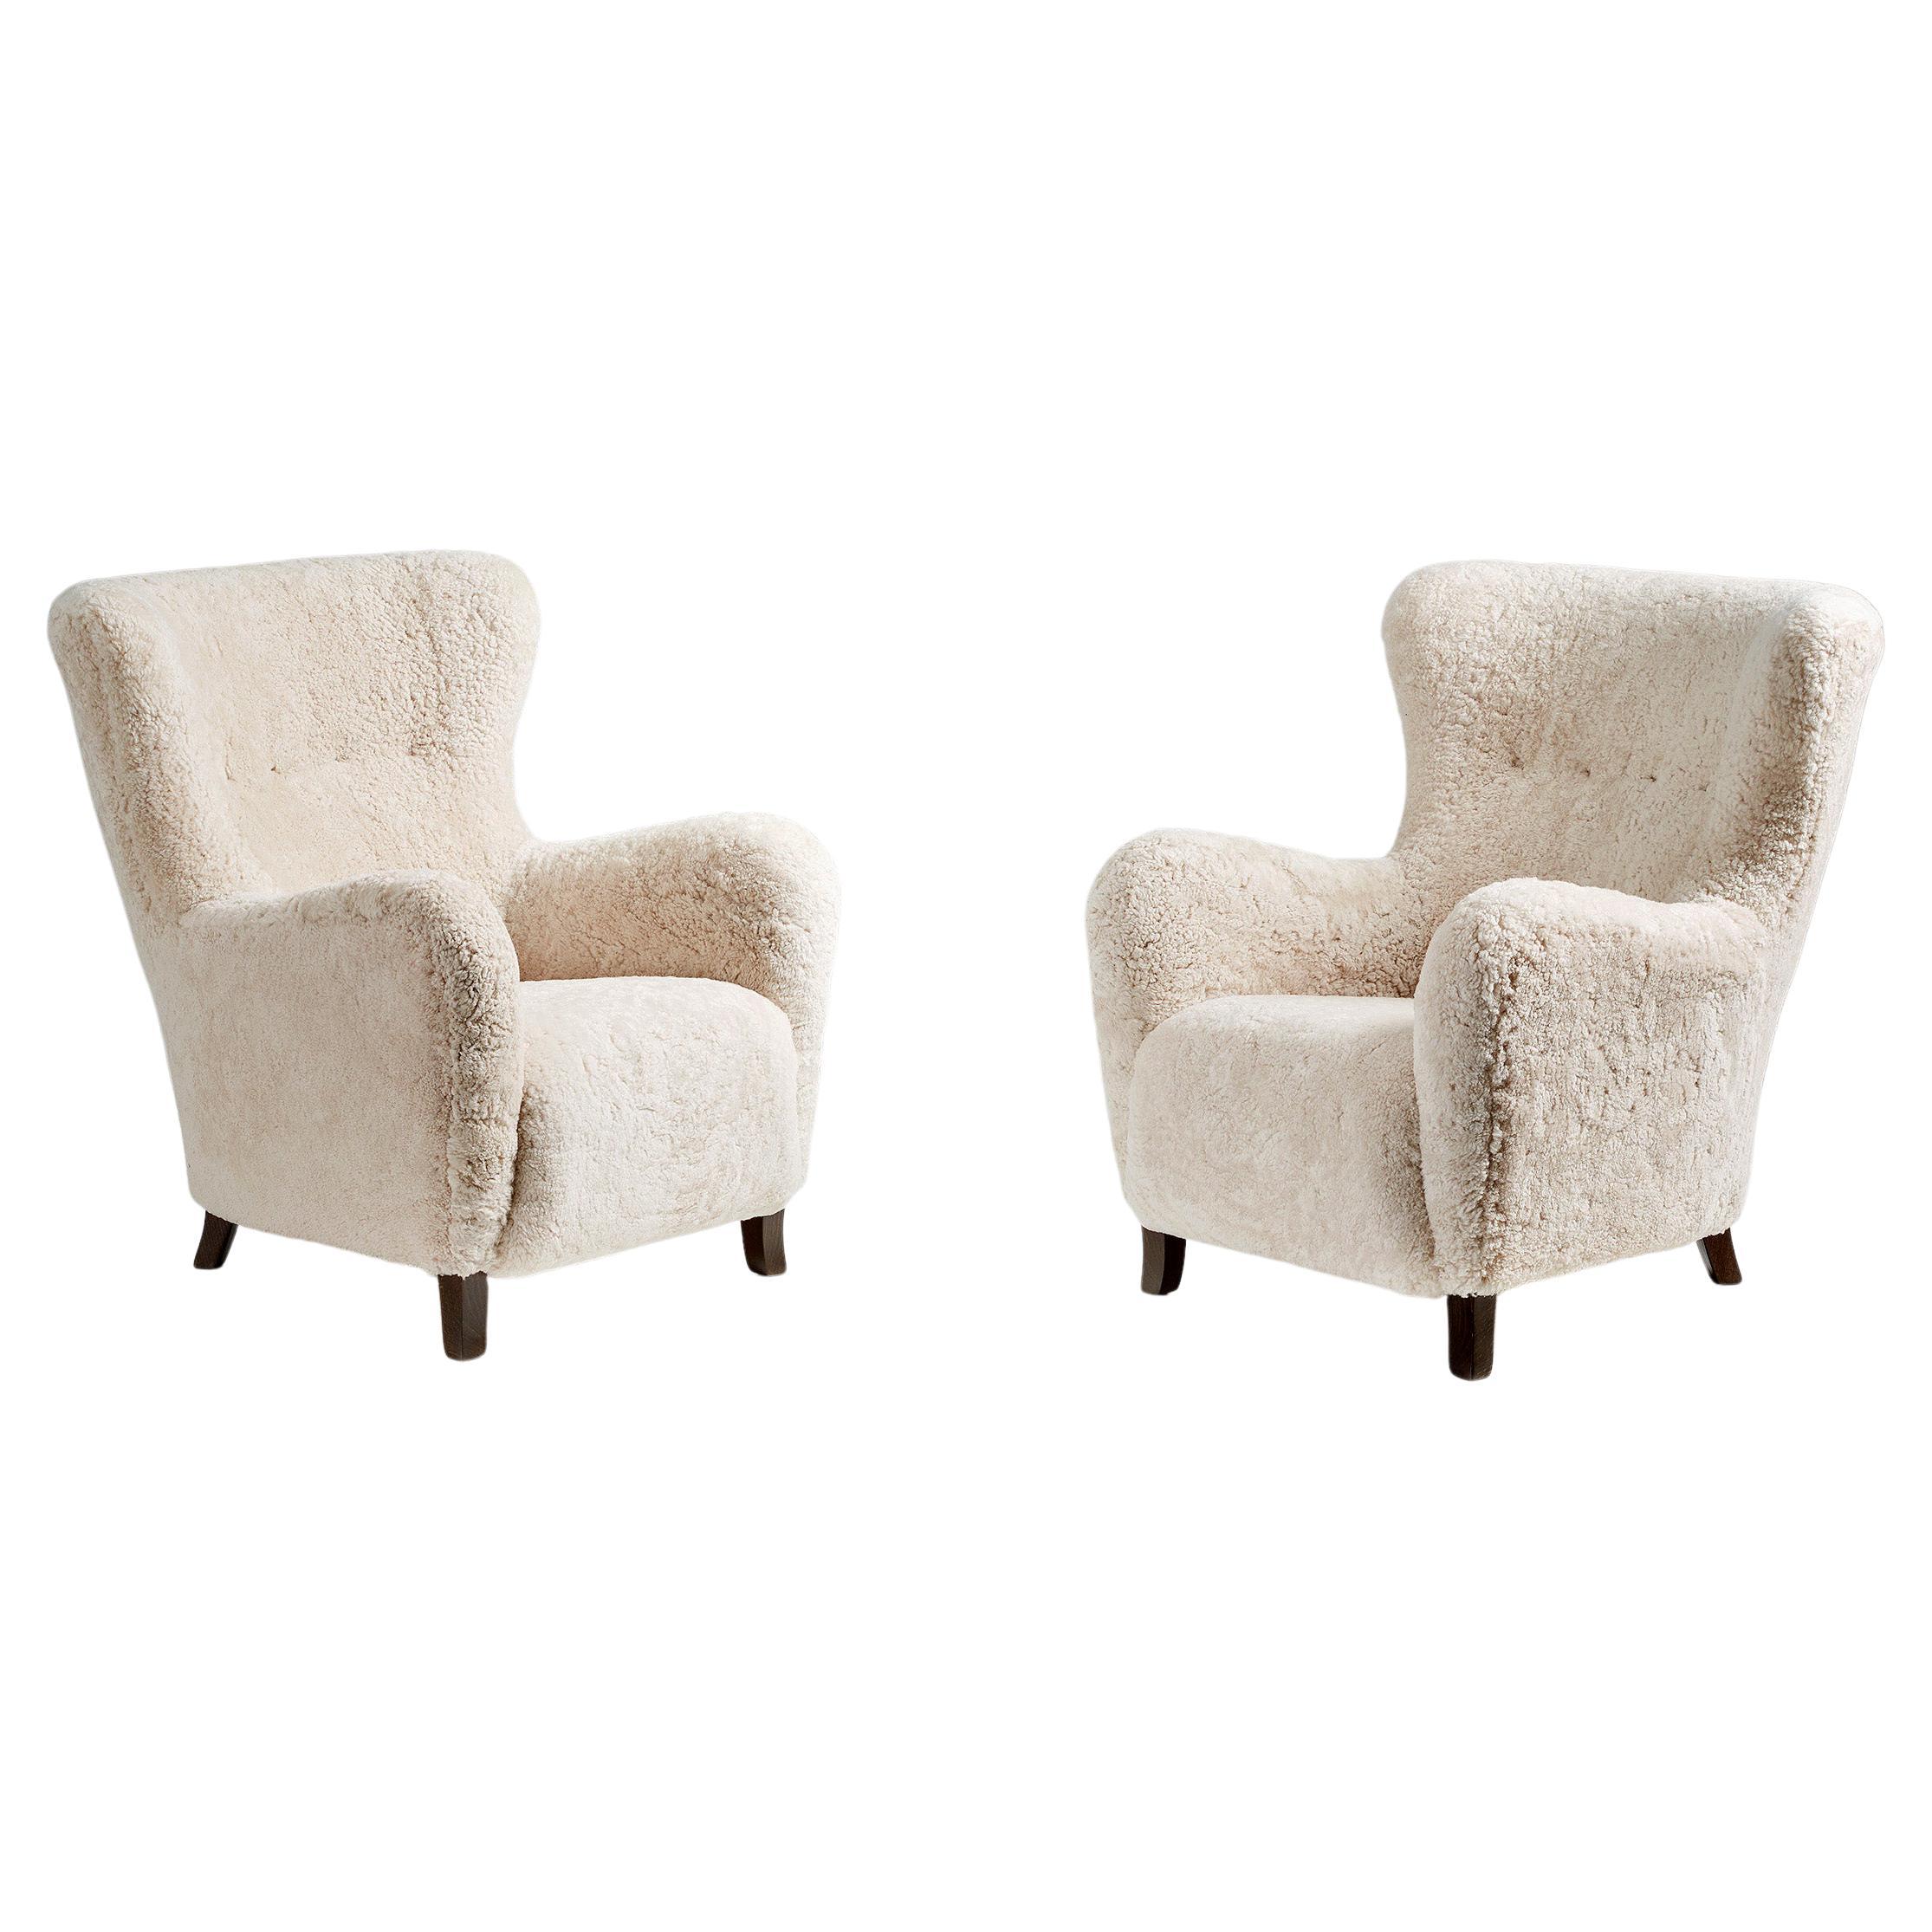 Custom Made Sheepskin Wing Chairs For Sale